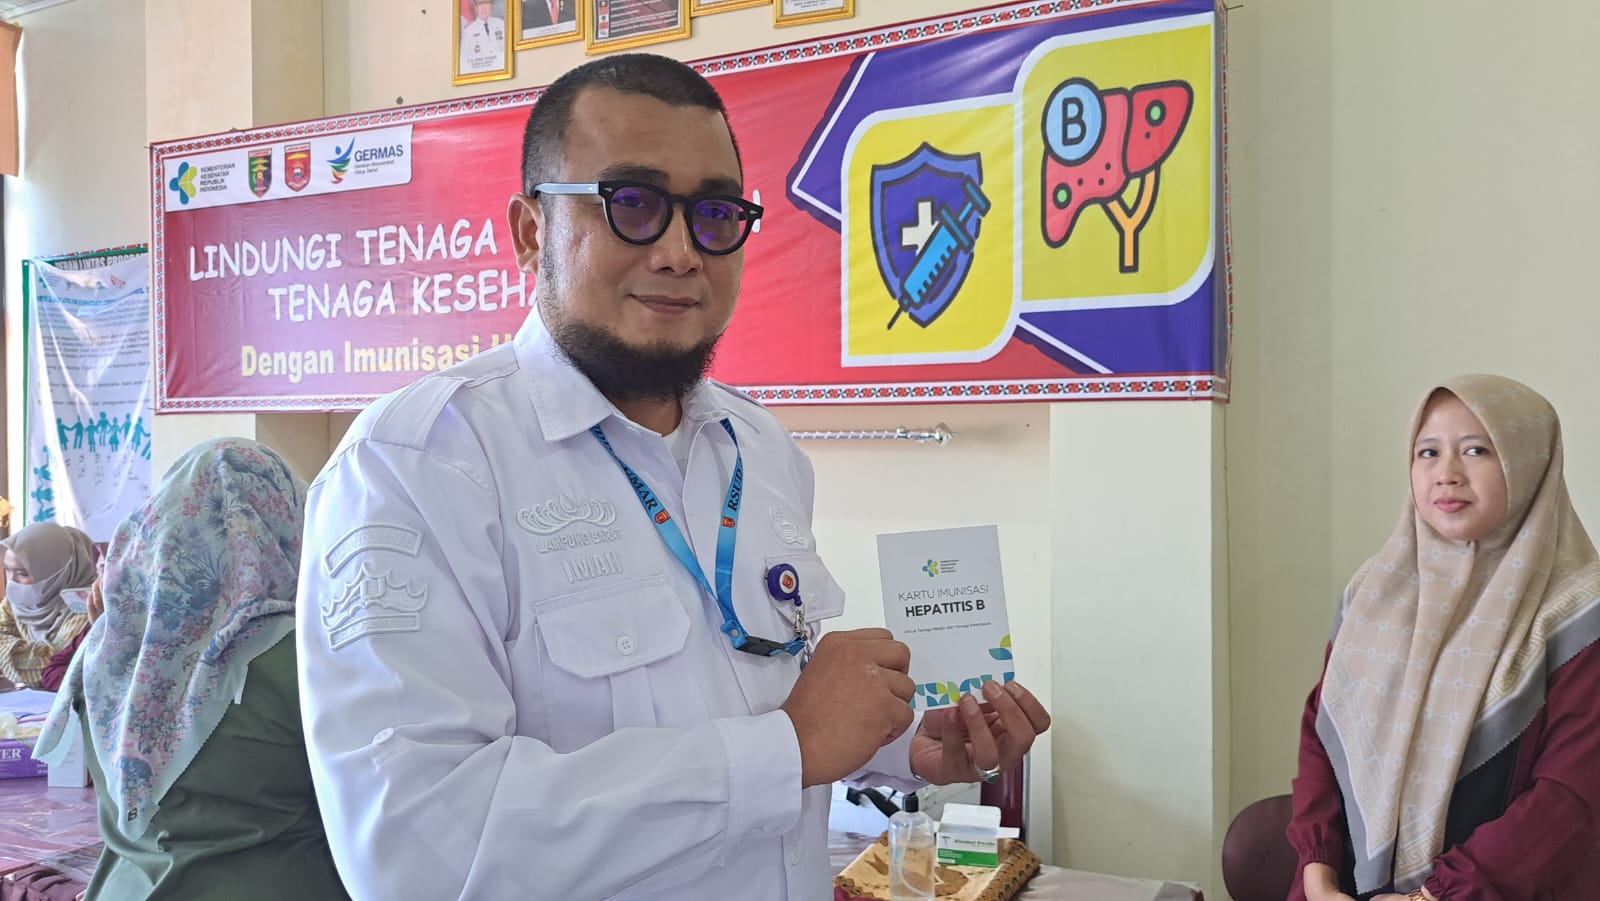 874 Nakes di Lampung Barat Jadi Peserta Imunisasi Hepatitis B